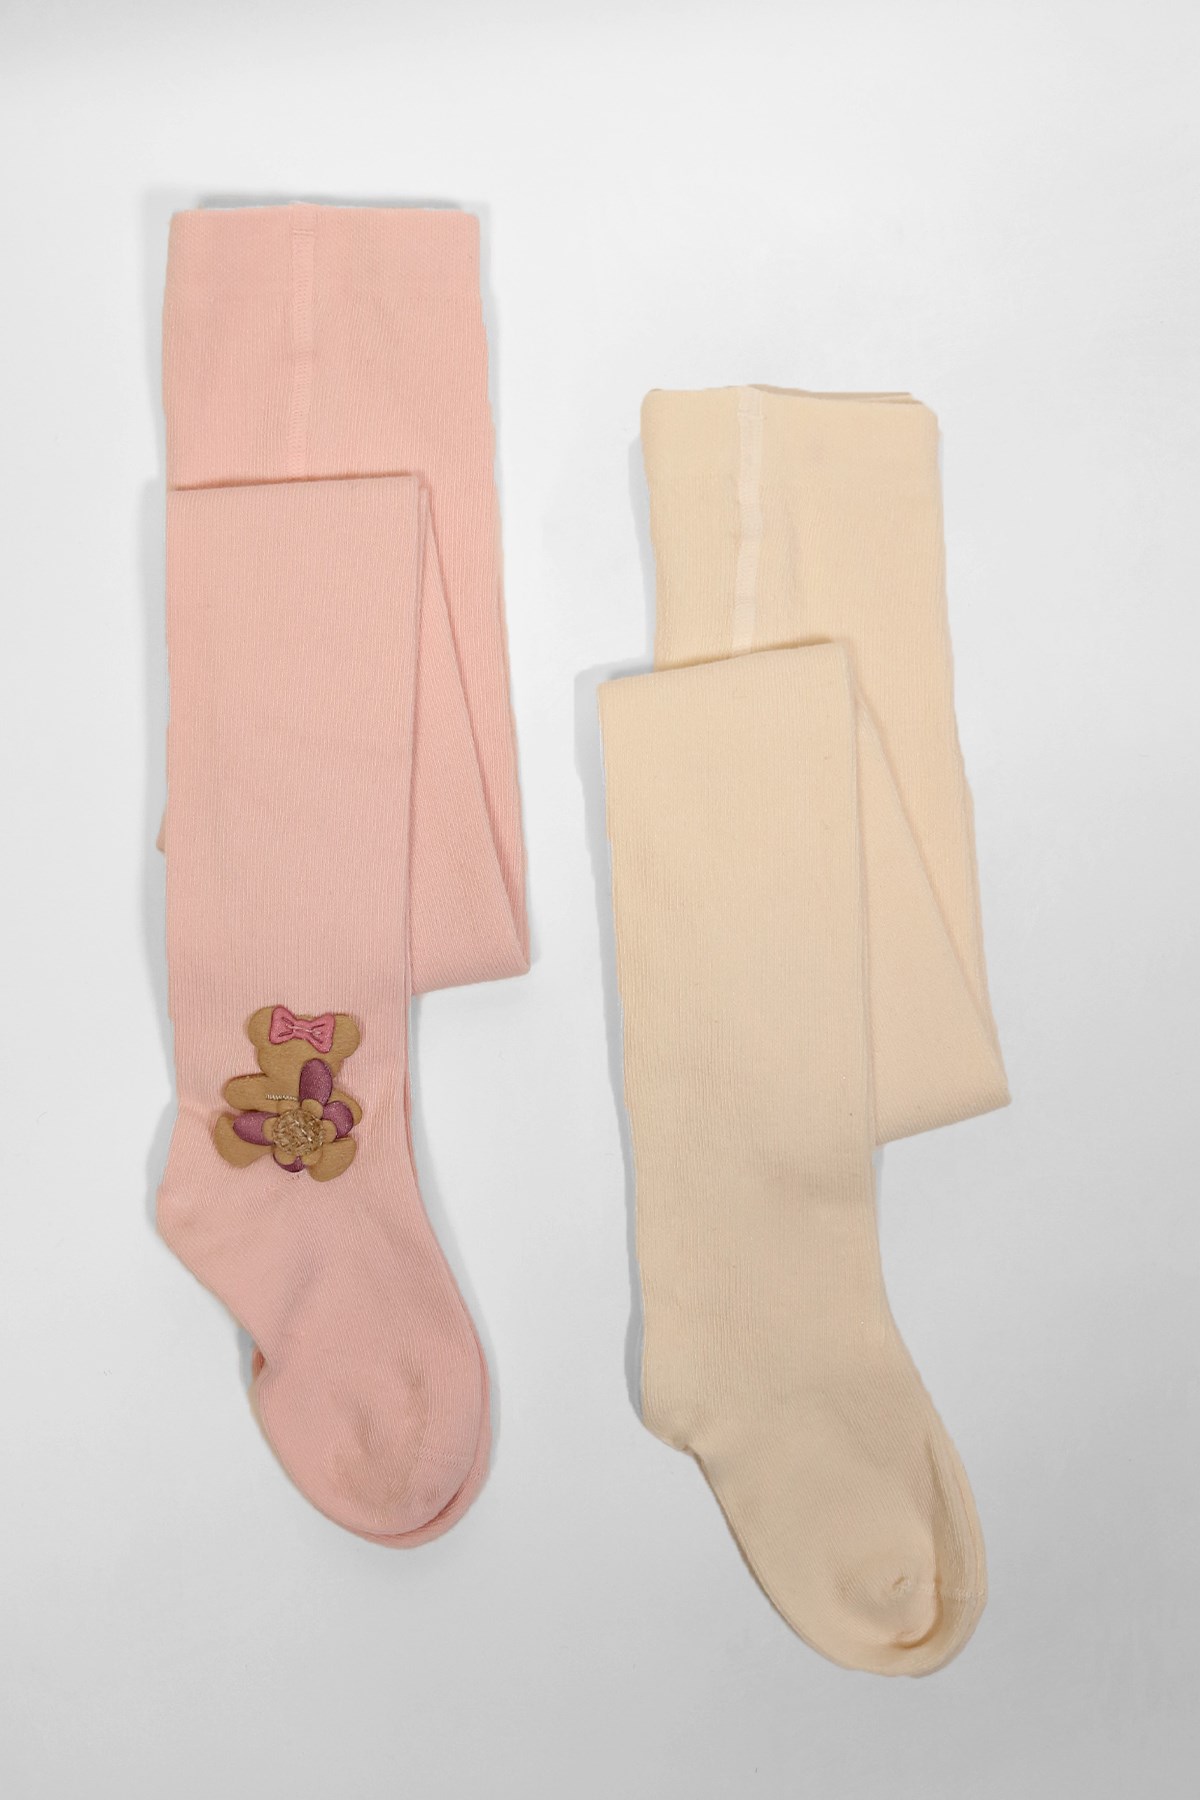 2'li Paket Fancy Kız Çocuk Külotlu Çorap ROSE PINK-ECRU